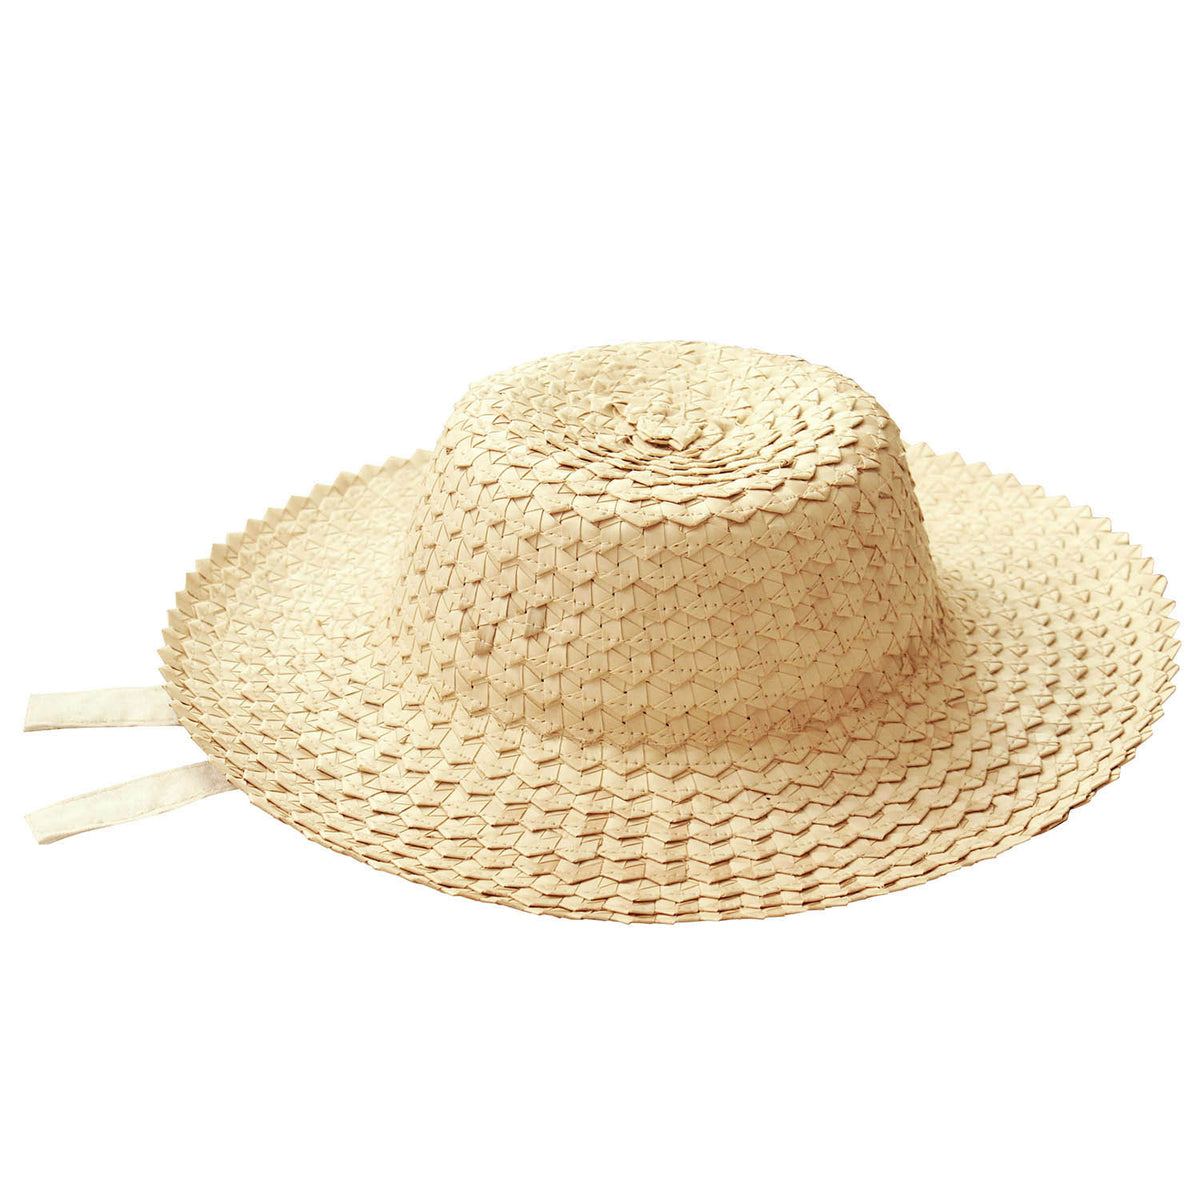 CELESTE Woven Straw Hat In Natural Beige